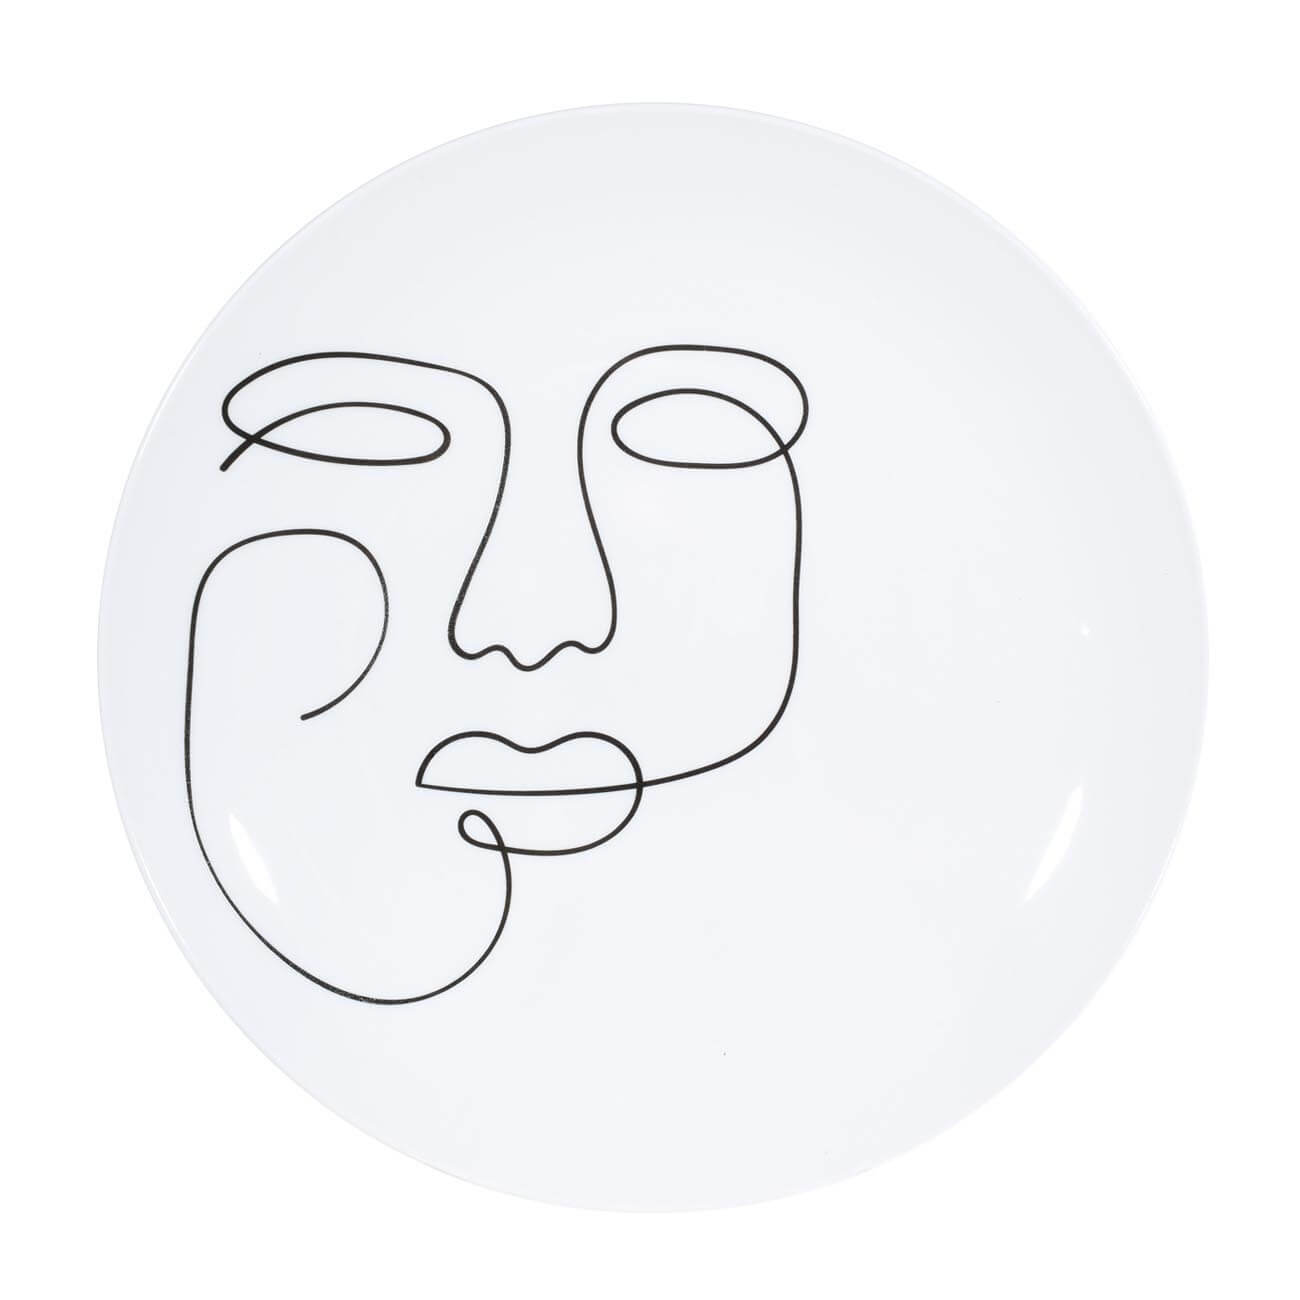 Тарелка обеденная, 27 см, 2 шт, фарфор N, белая, Контурное лицо, Face